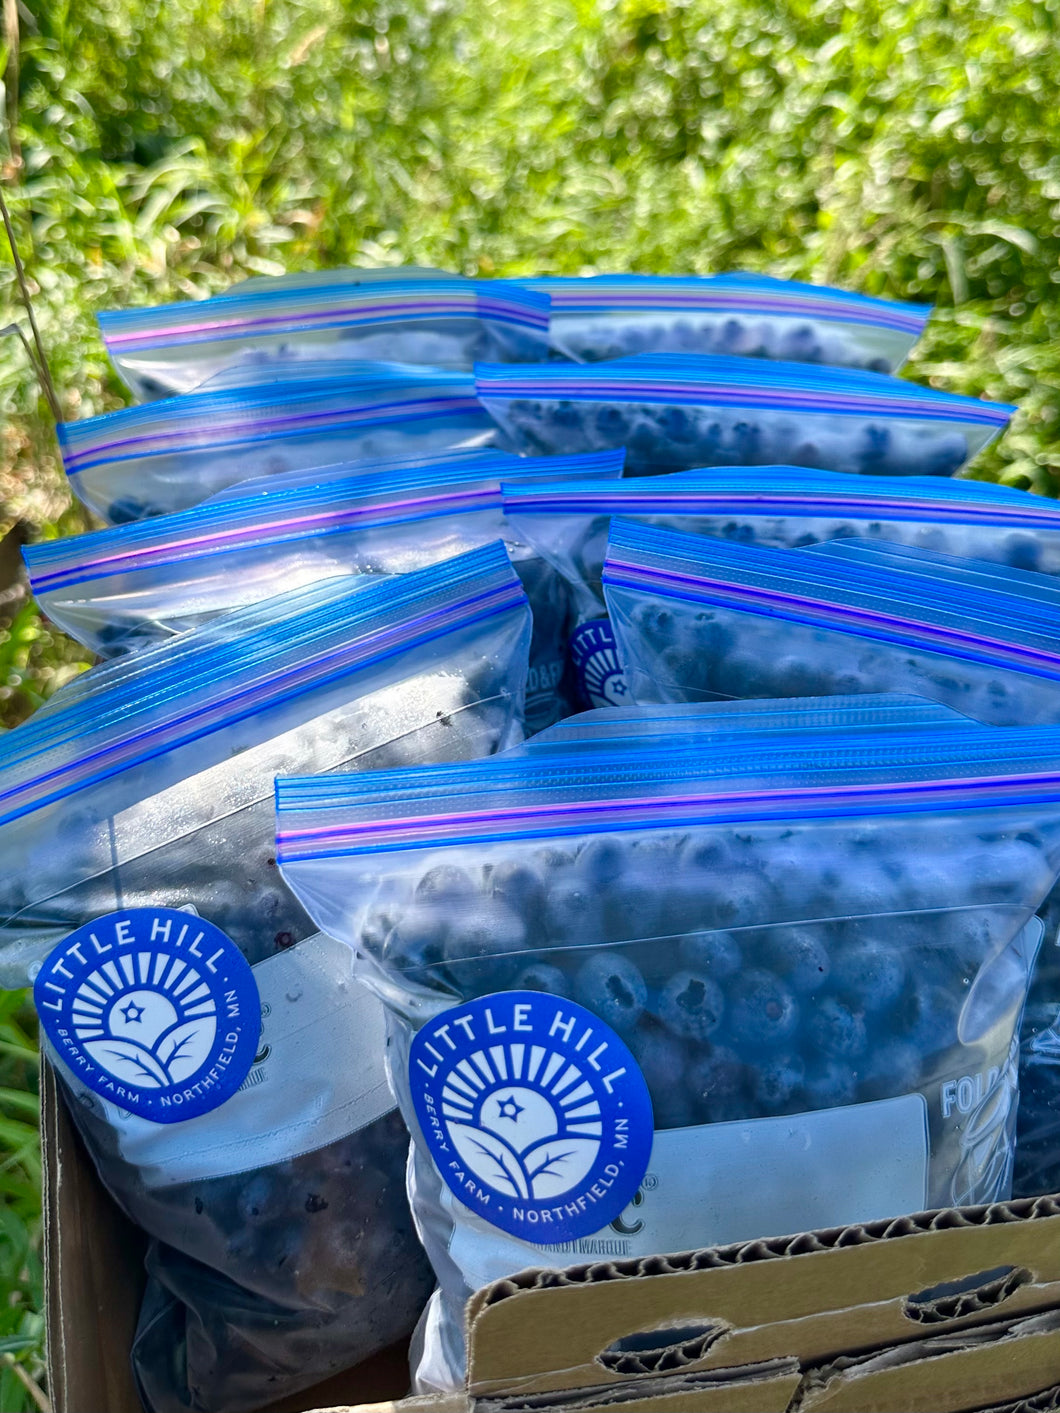 Frozen Organic Blueberries